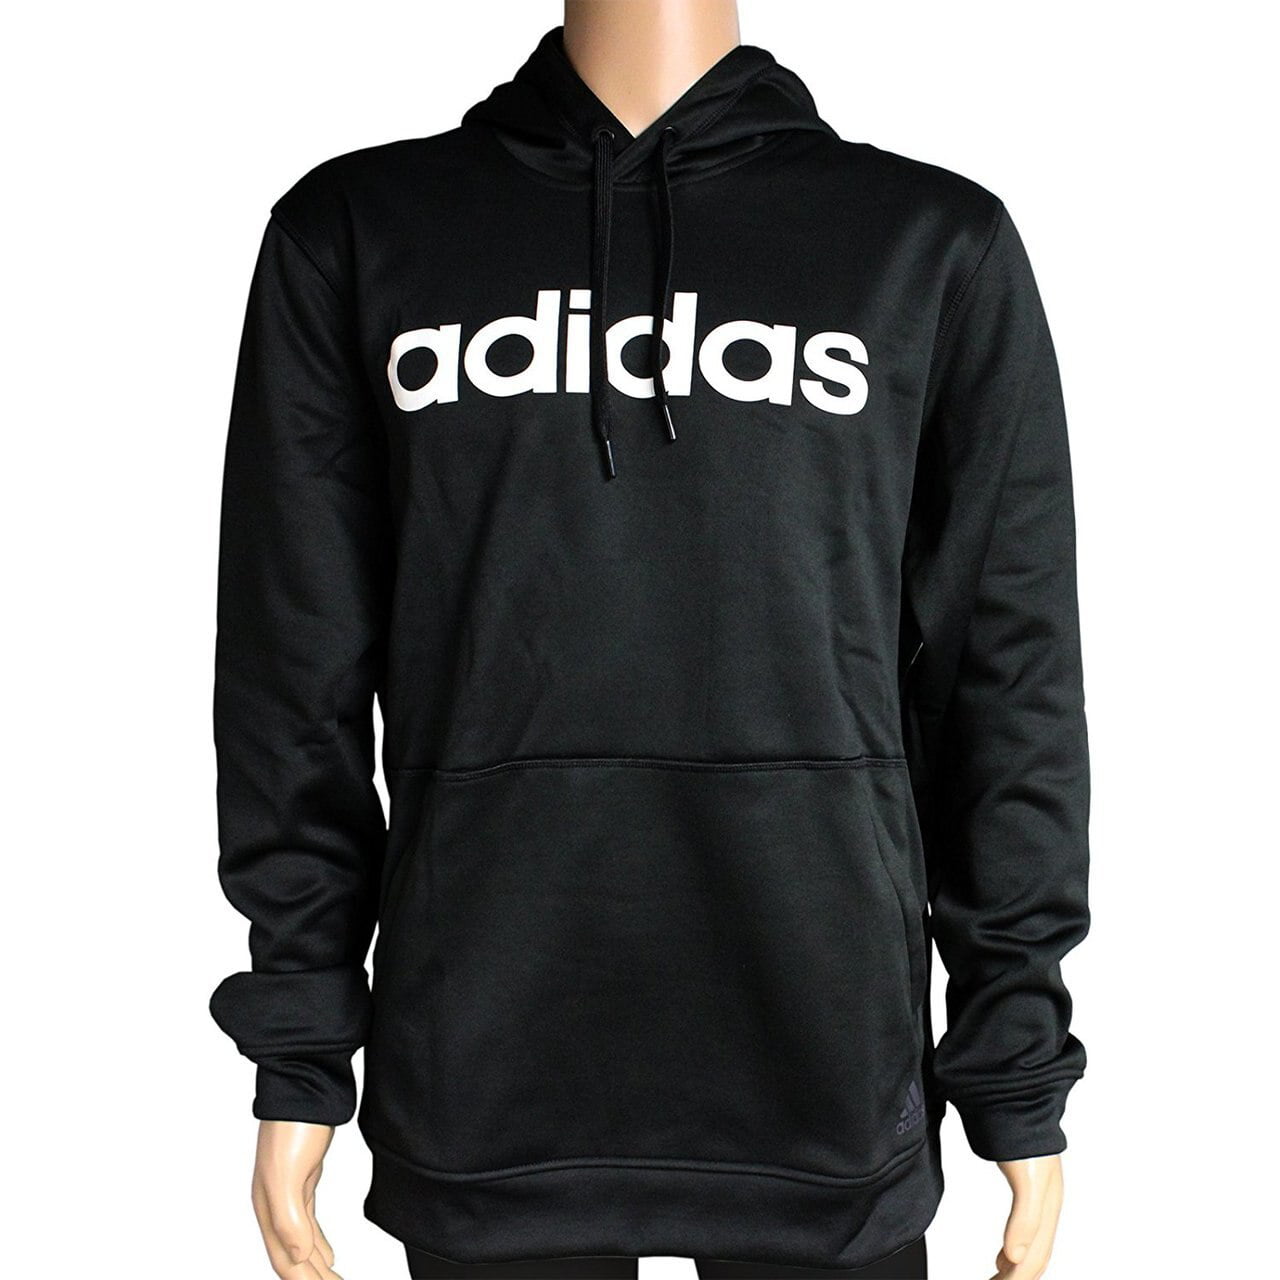 Adidas - Adidas Team Issue Fleece Pullover Hoodie BR6236 - Black, White ...